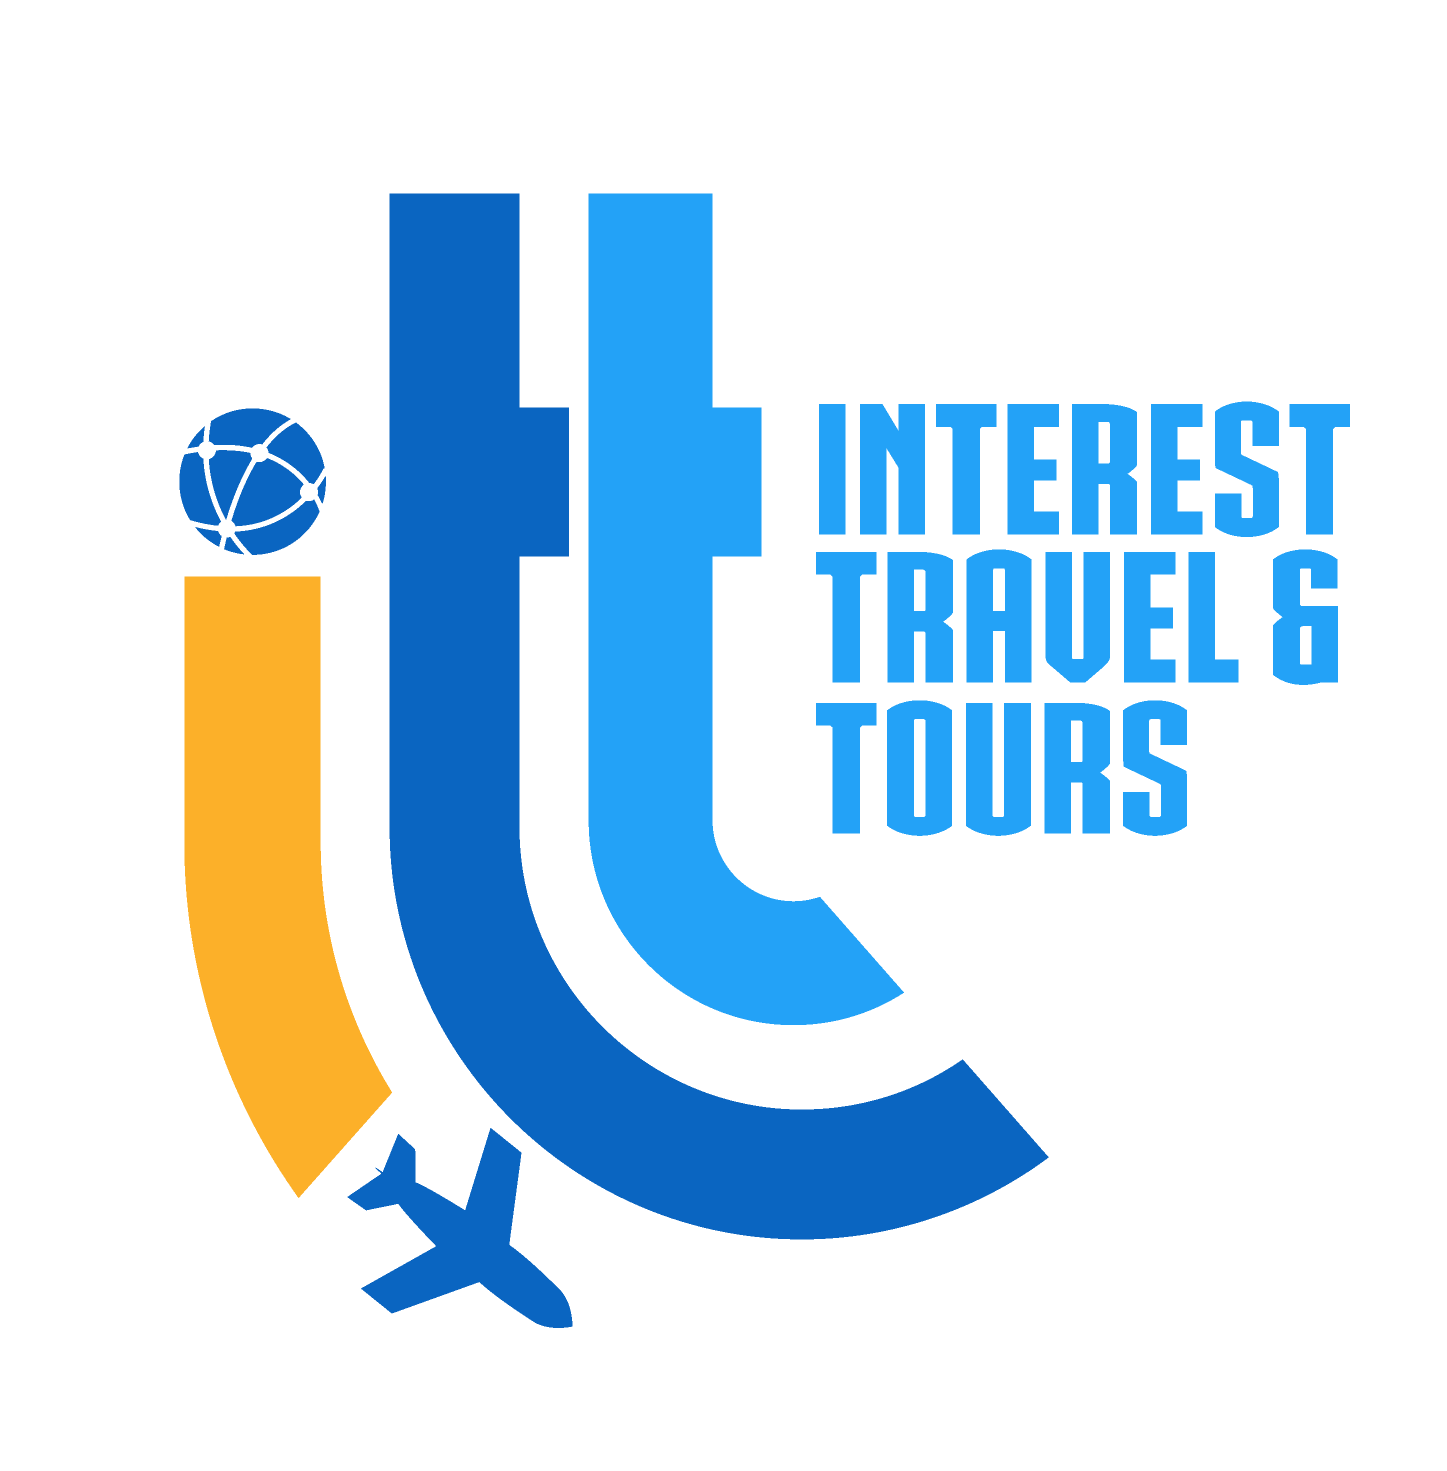 Interest Travel And Tours | About Us - Interest Travel And Tours ~ Unique experiences